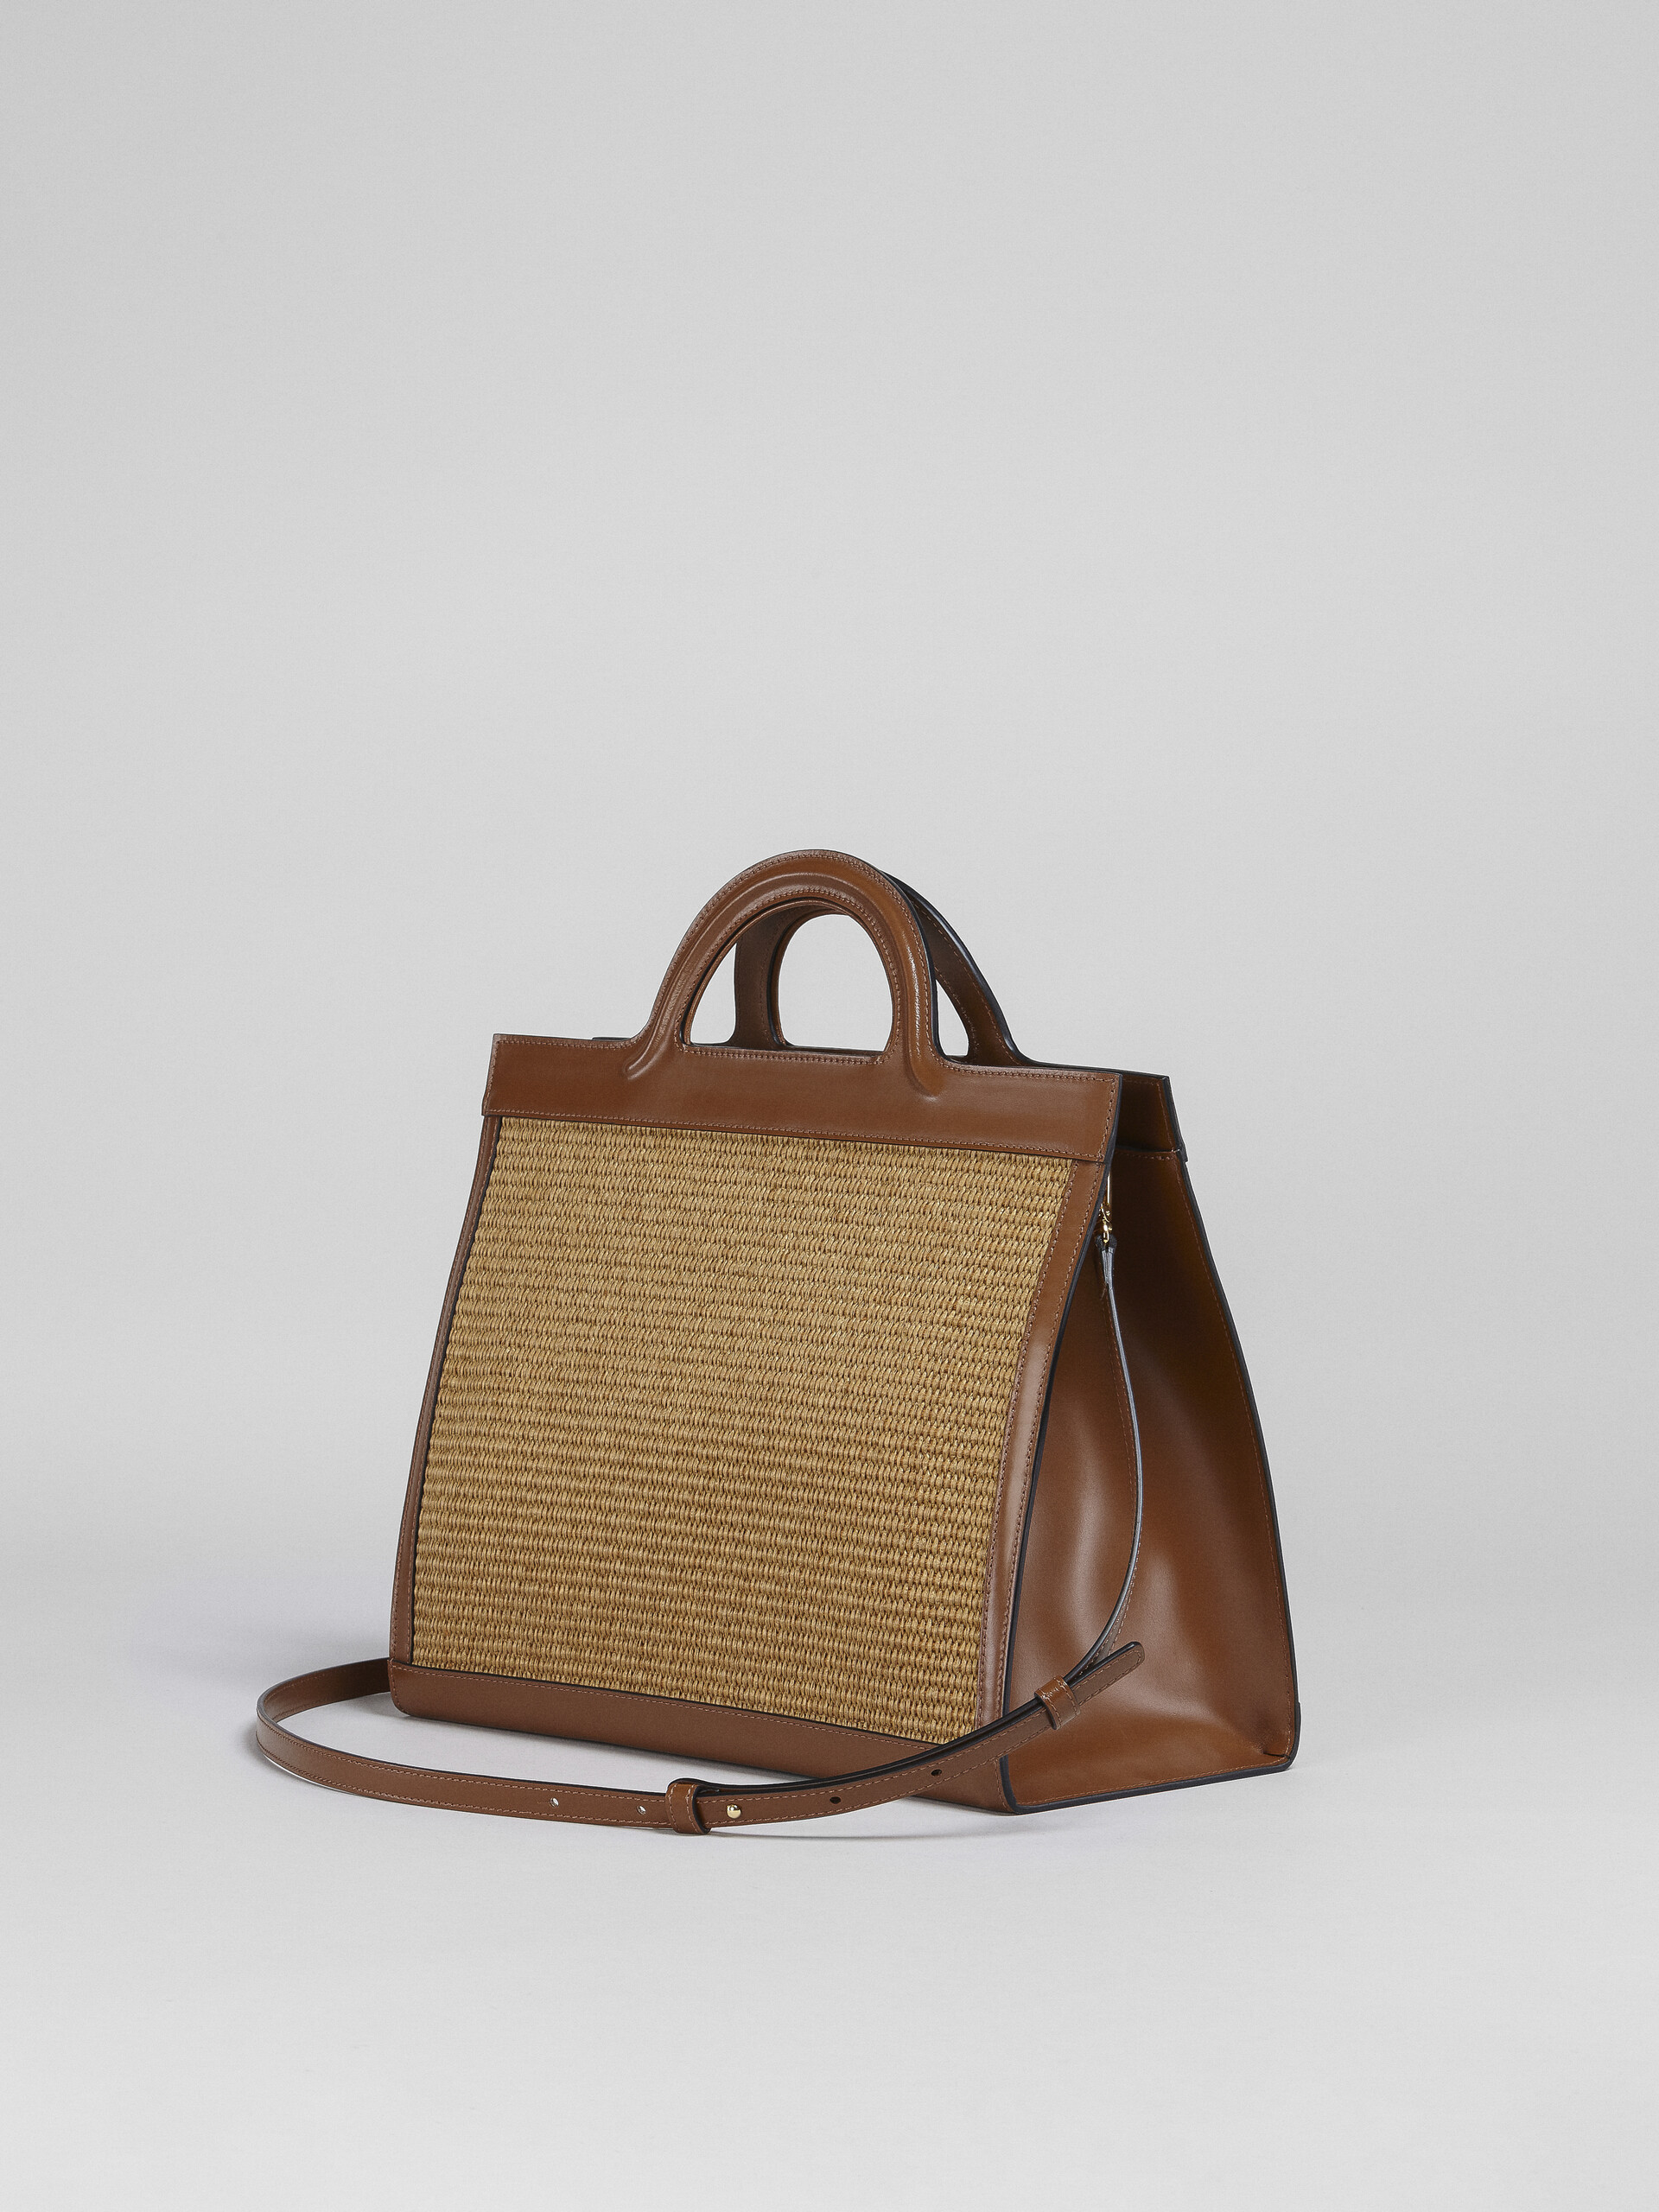 TROPICALIA tote bag in brown leather and raffia - Handbag - Image 3